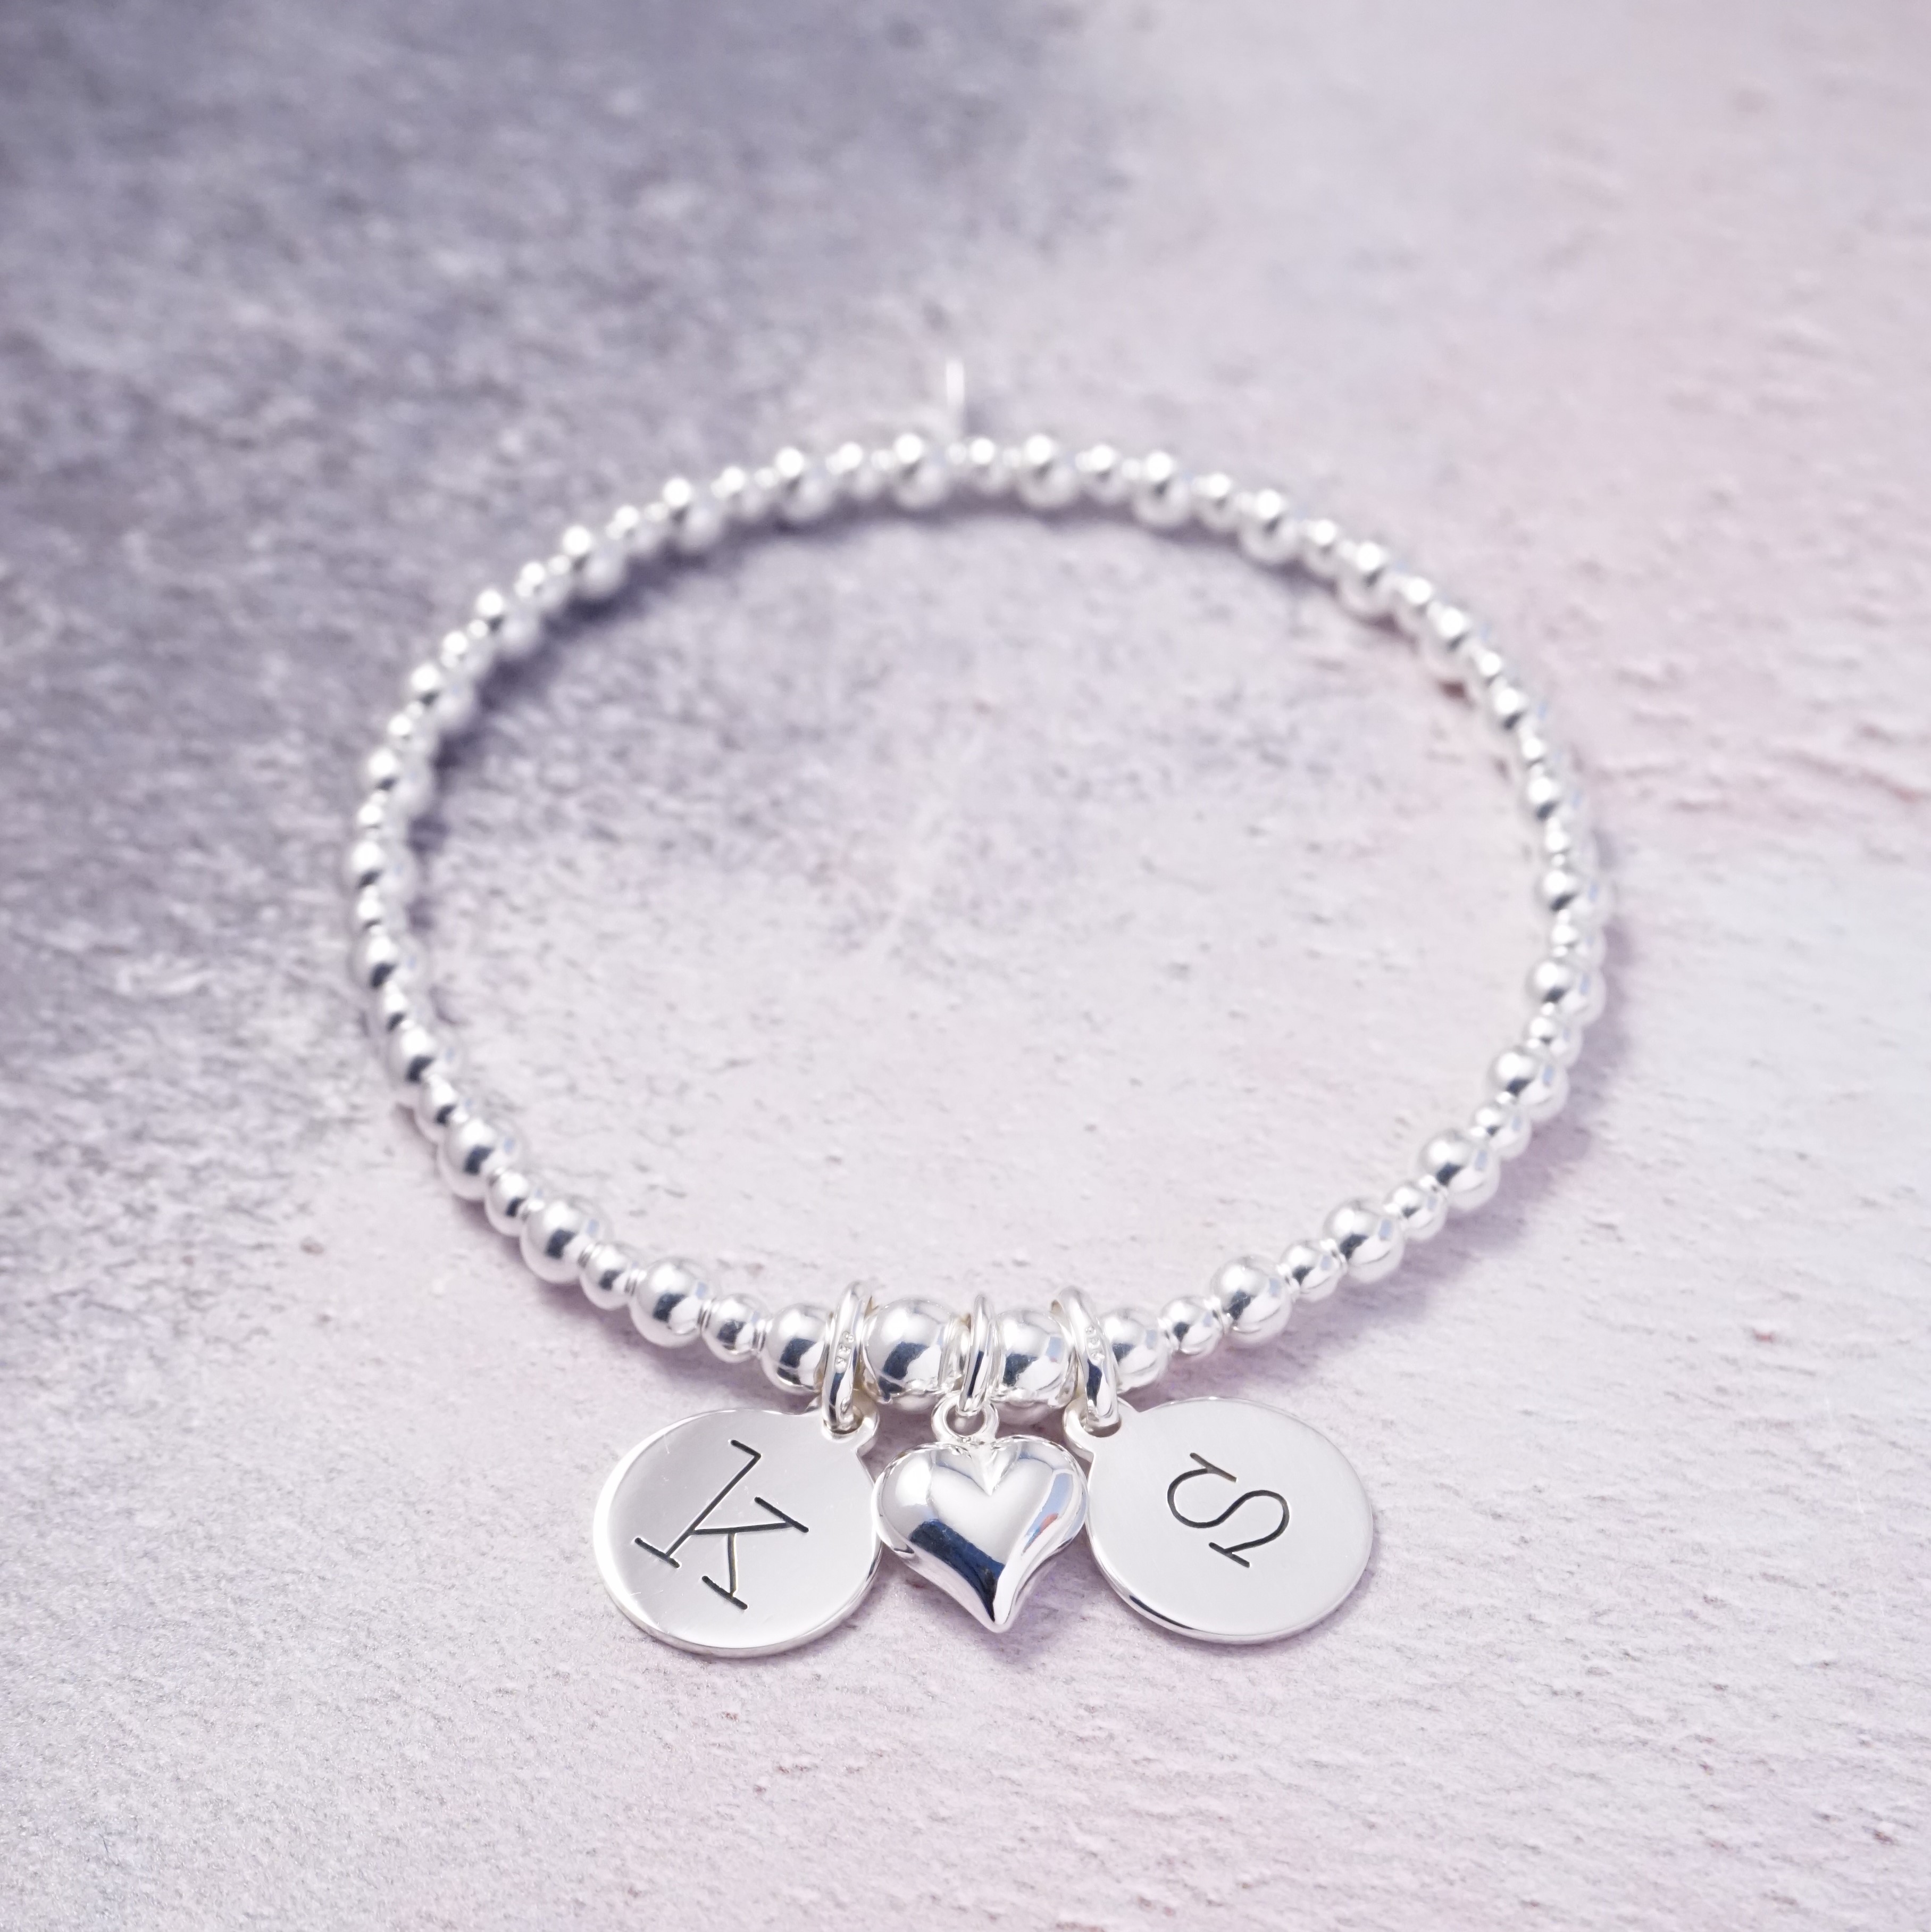 silver stretch bracelets with charms